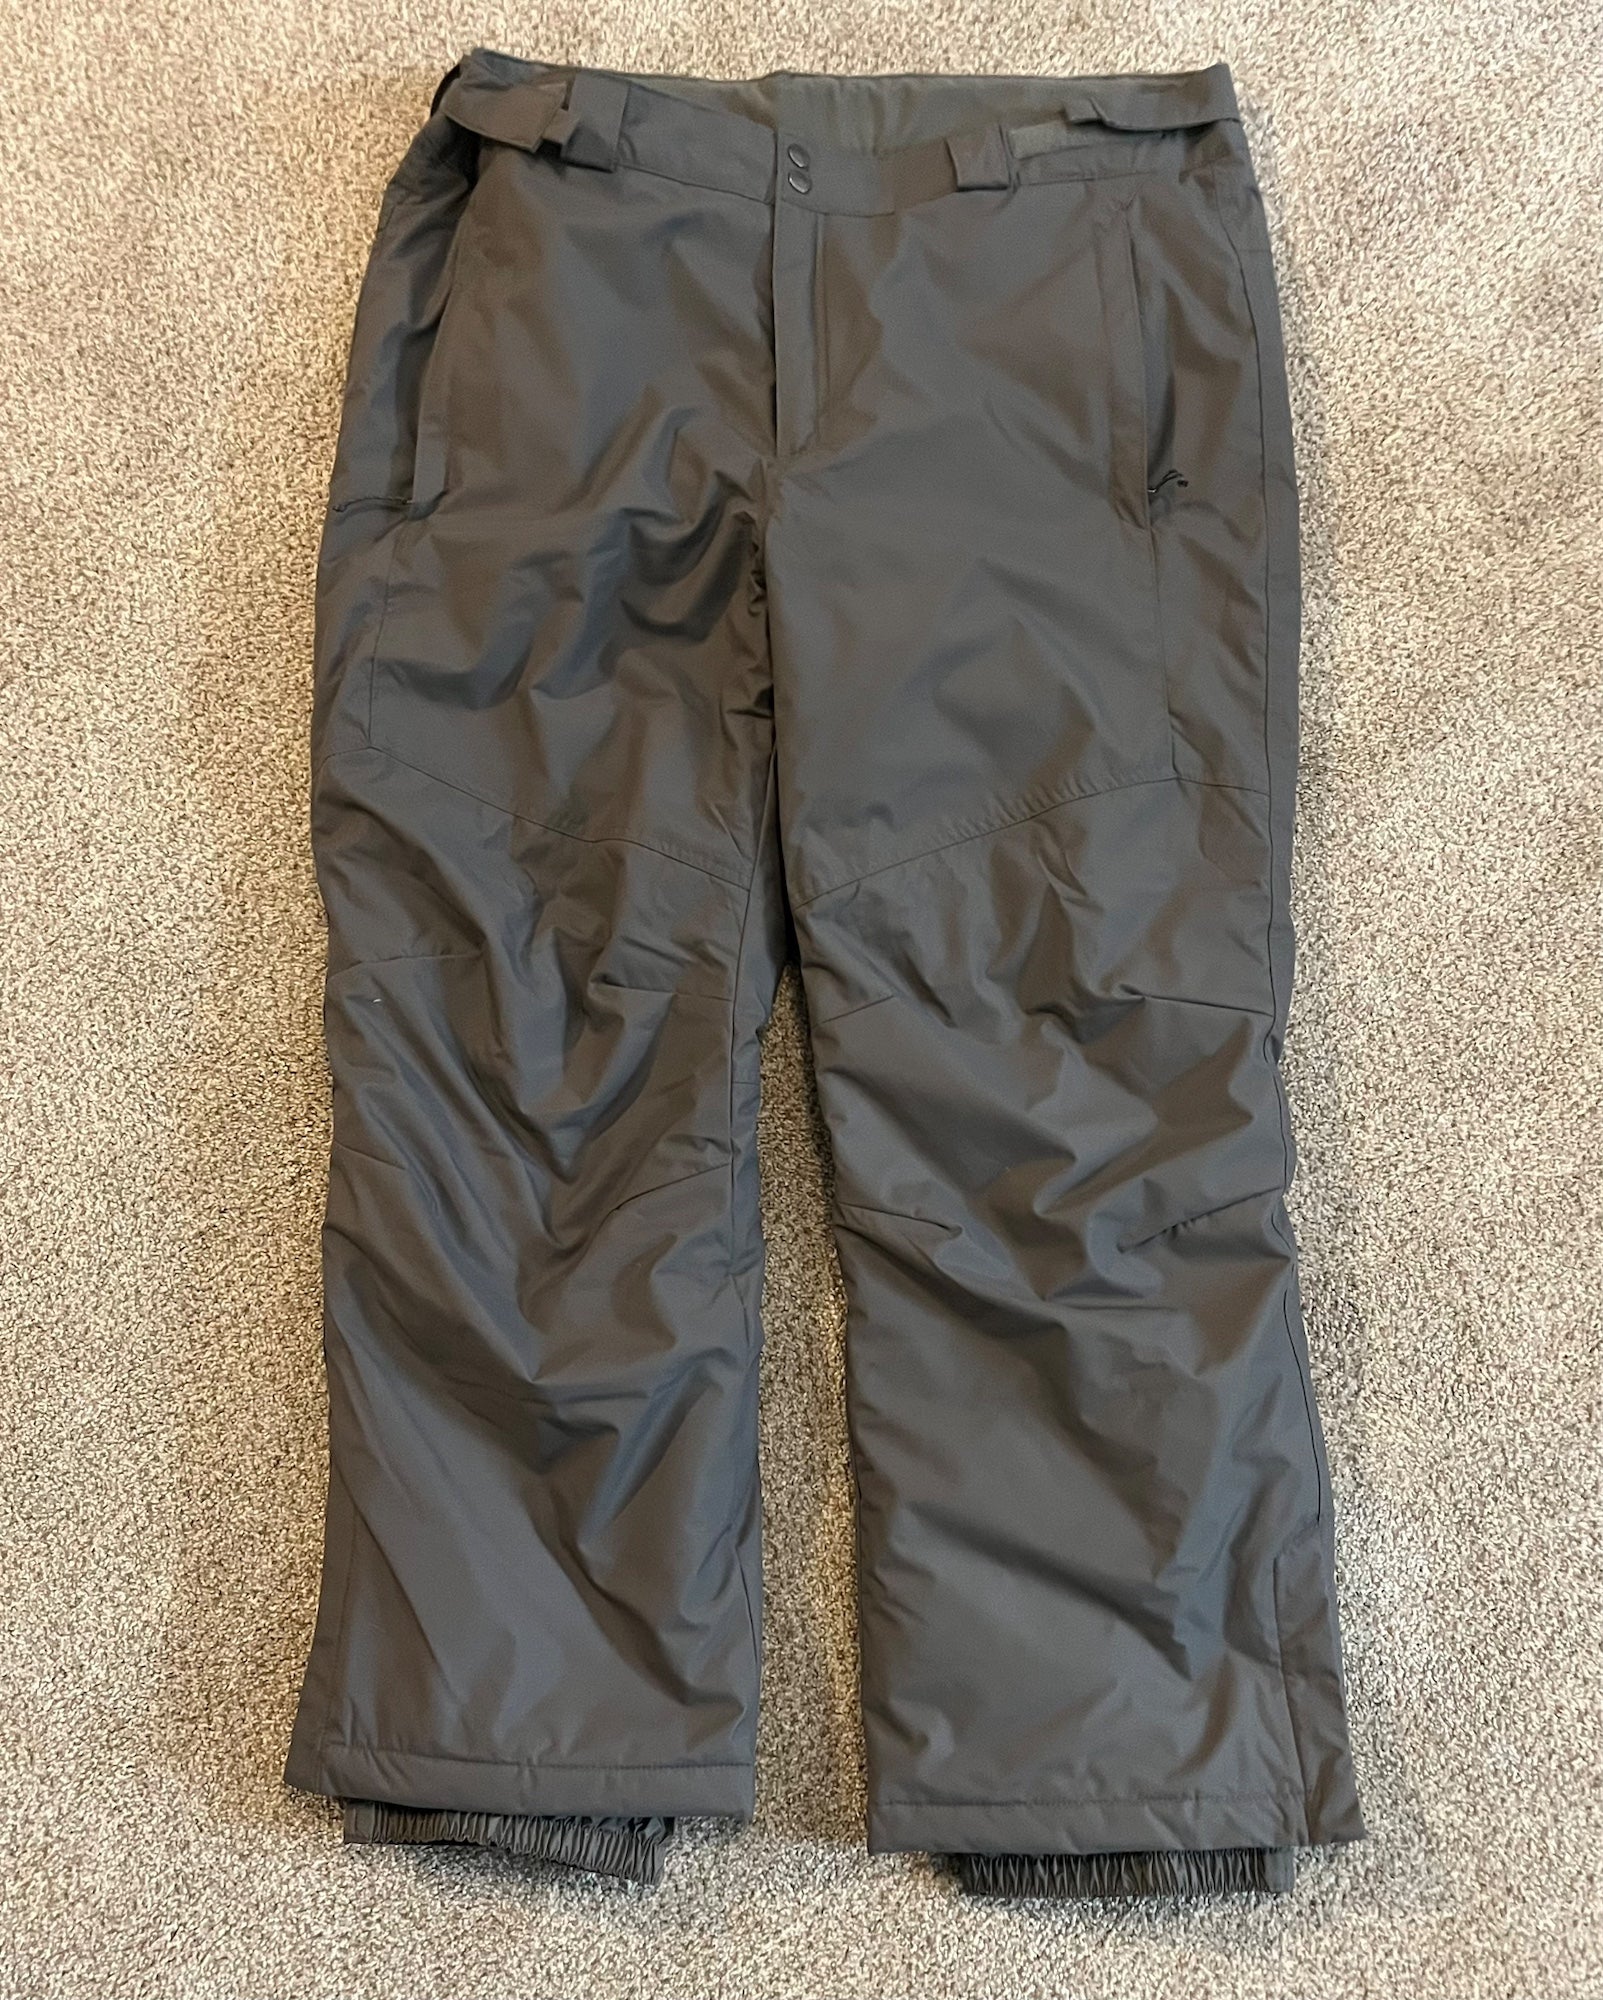 Men's Columbia Omni Heat Snow Pants - XL